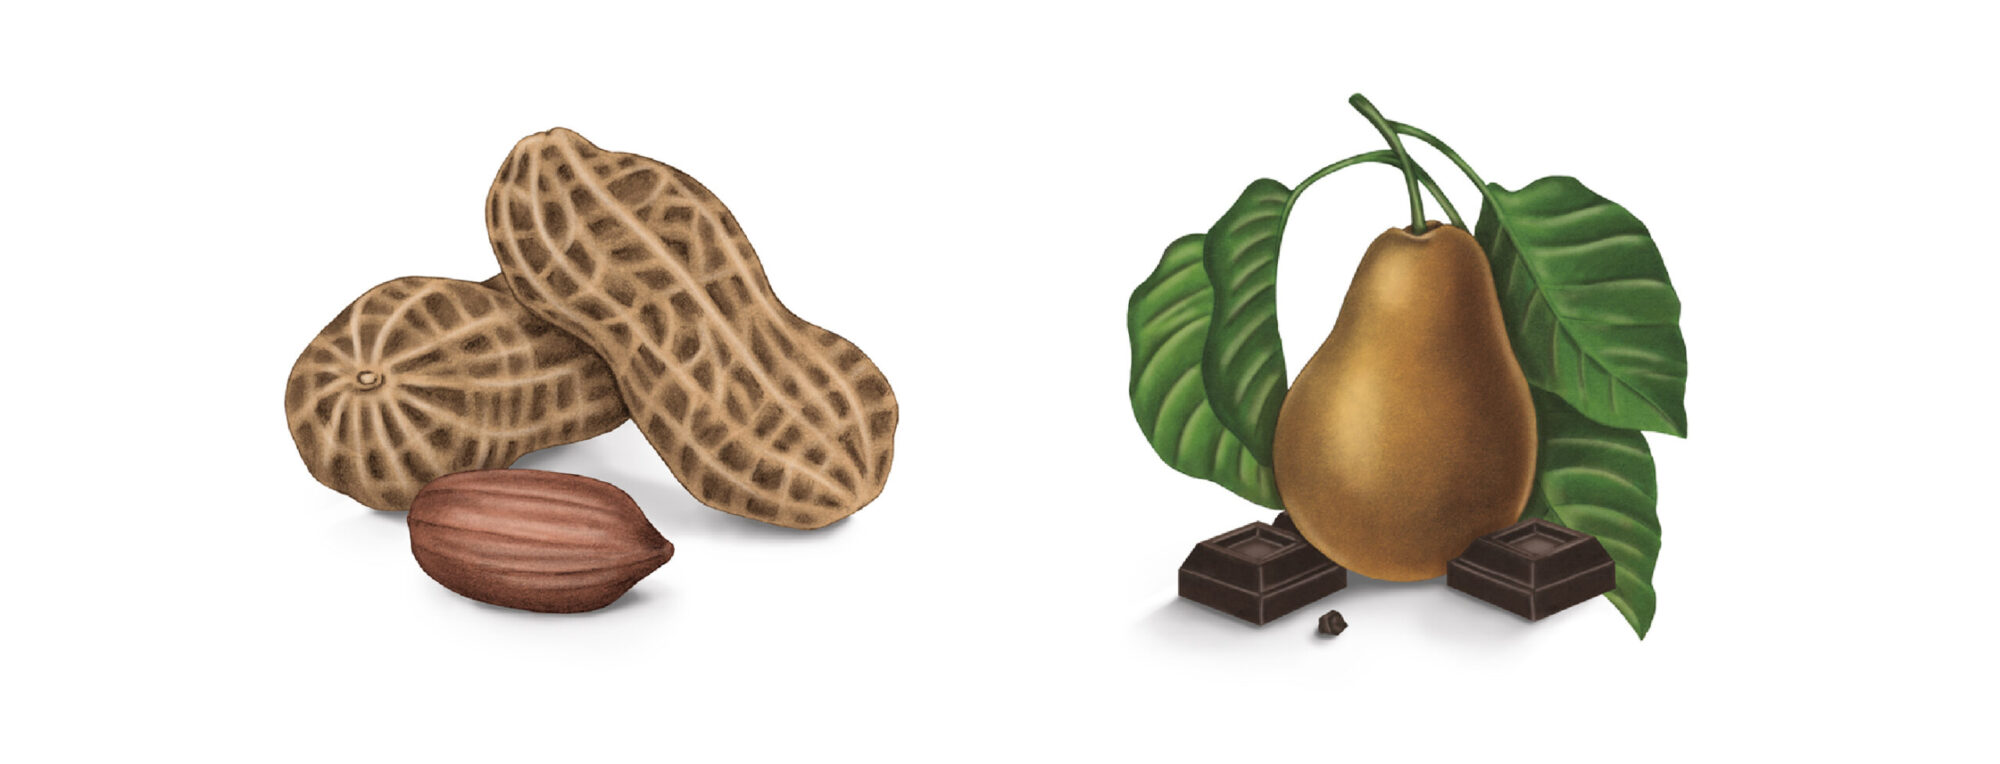 giulia-borsi-illustration-label-design-peanuts-pears-chocolate